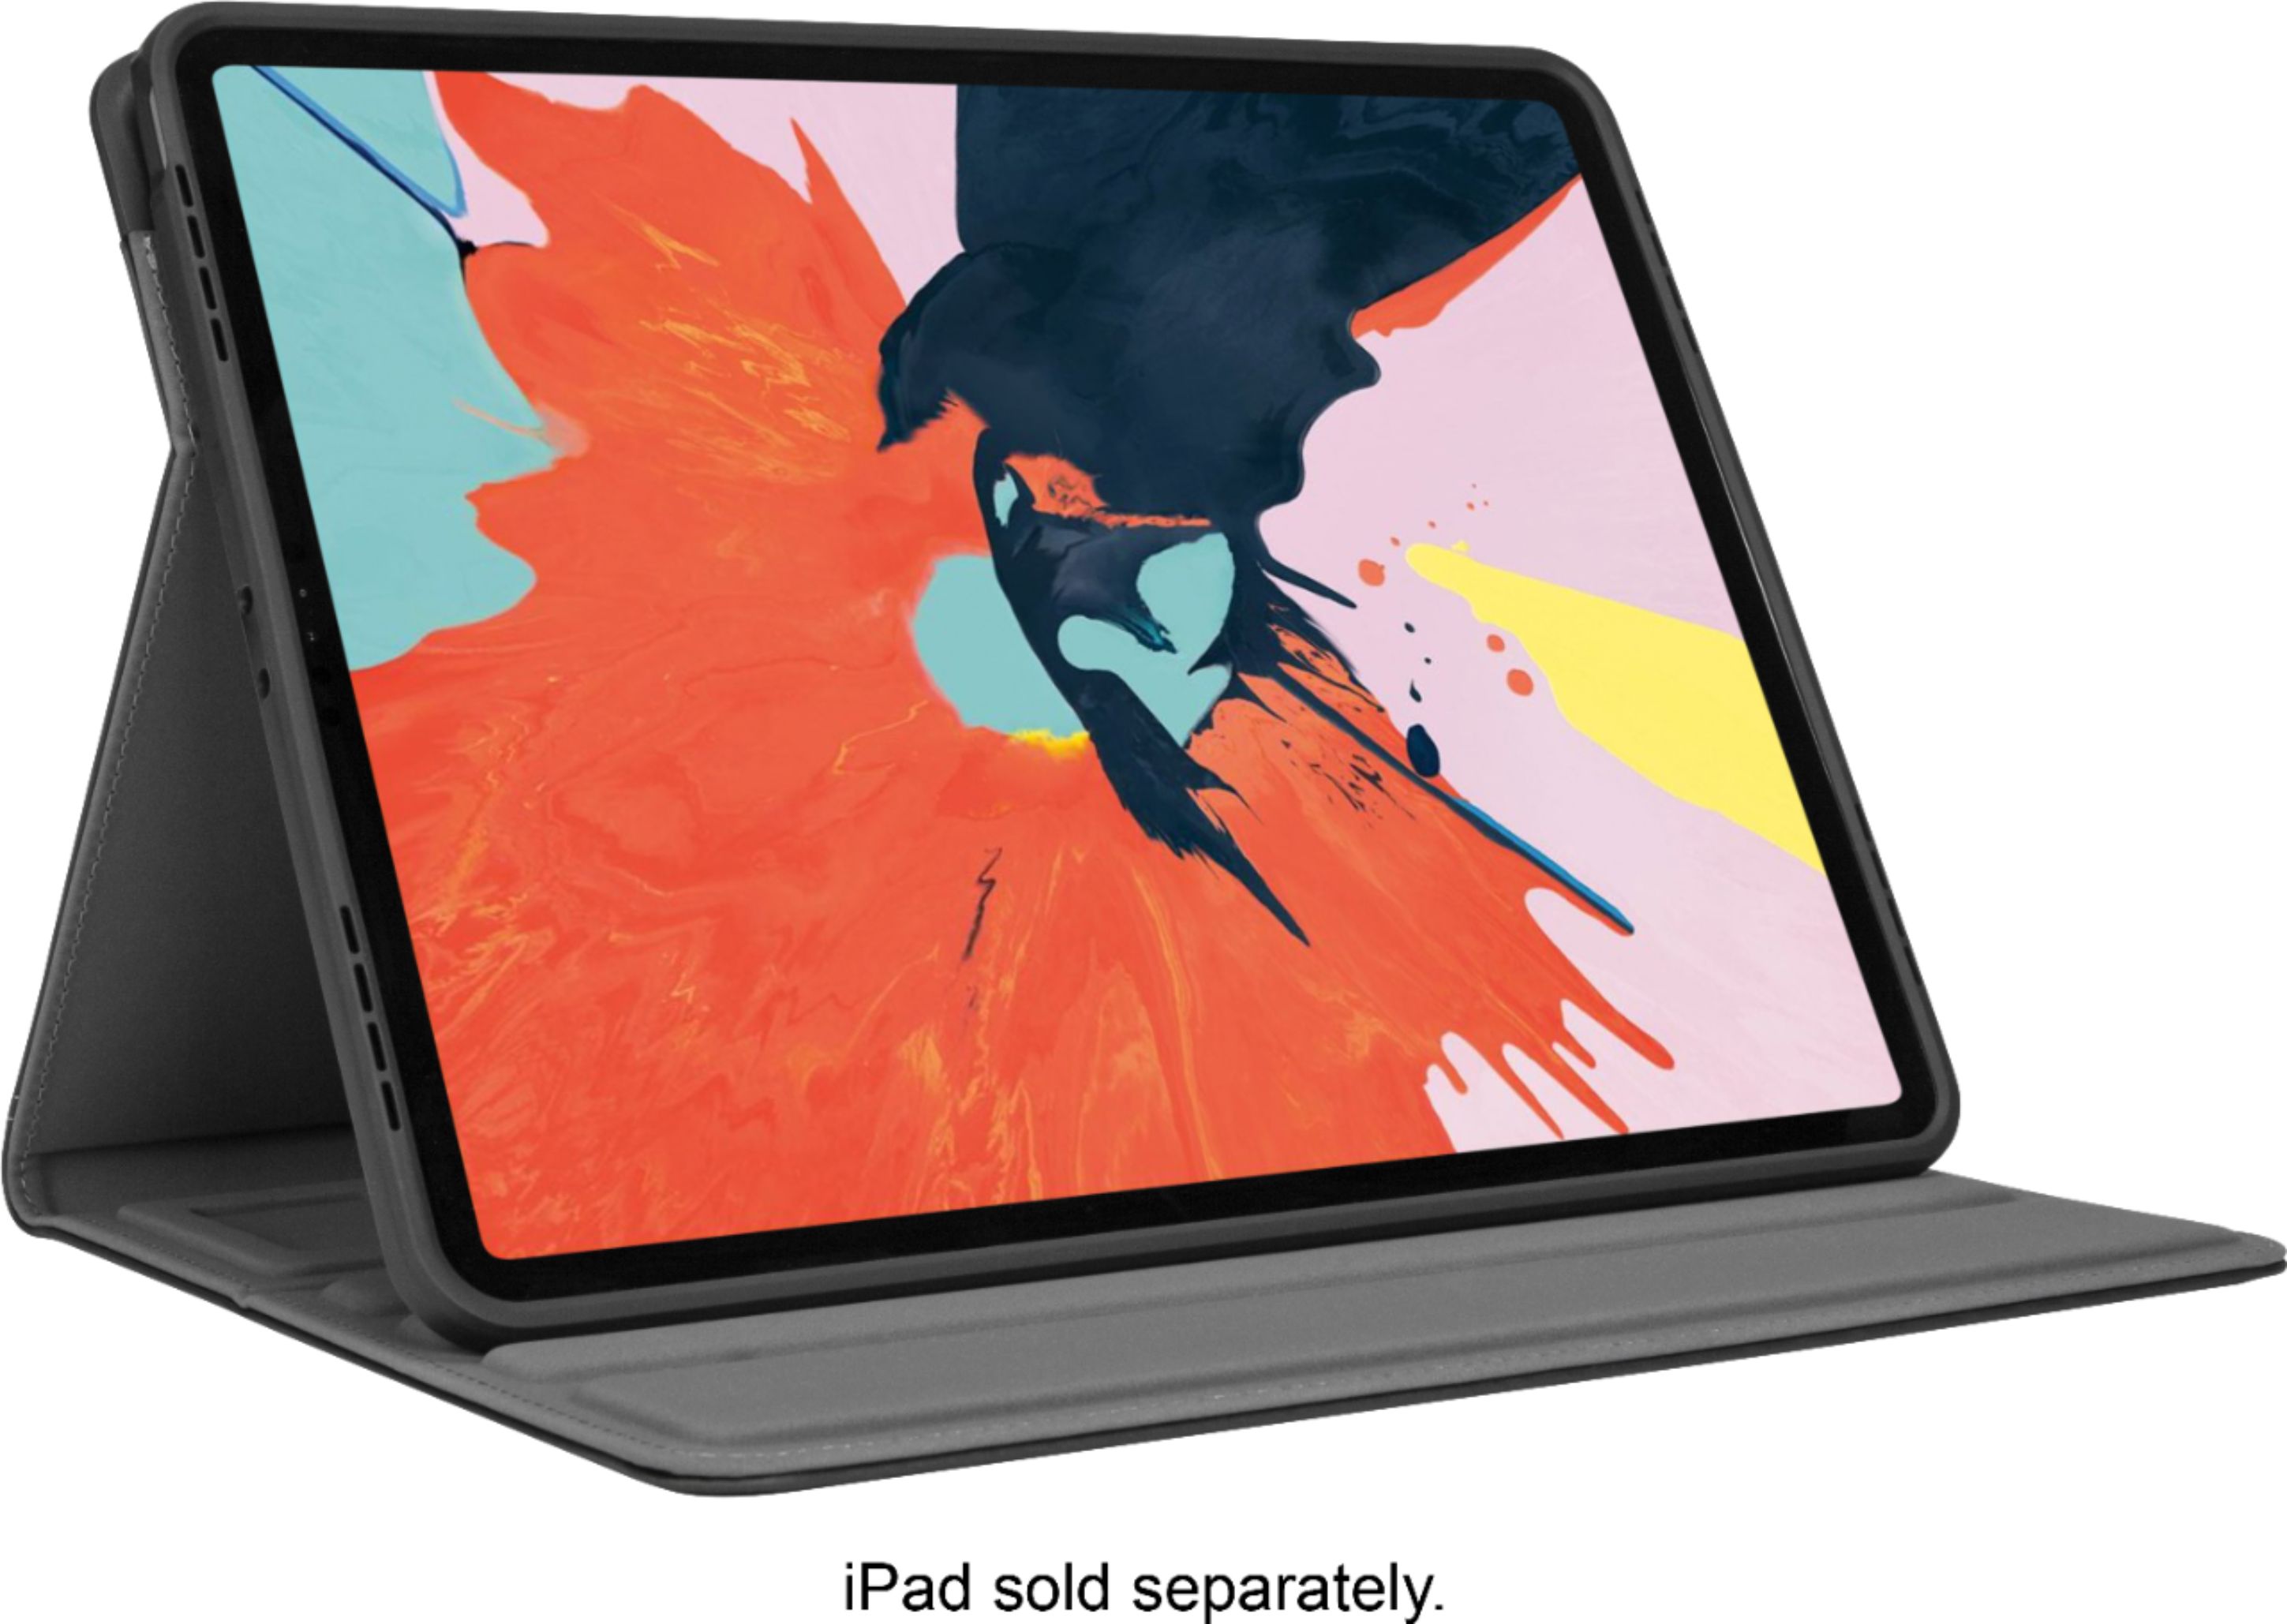 Heritage - iPad Pro 12.9 (6th/5th/4th/3rd Gen) Case